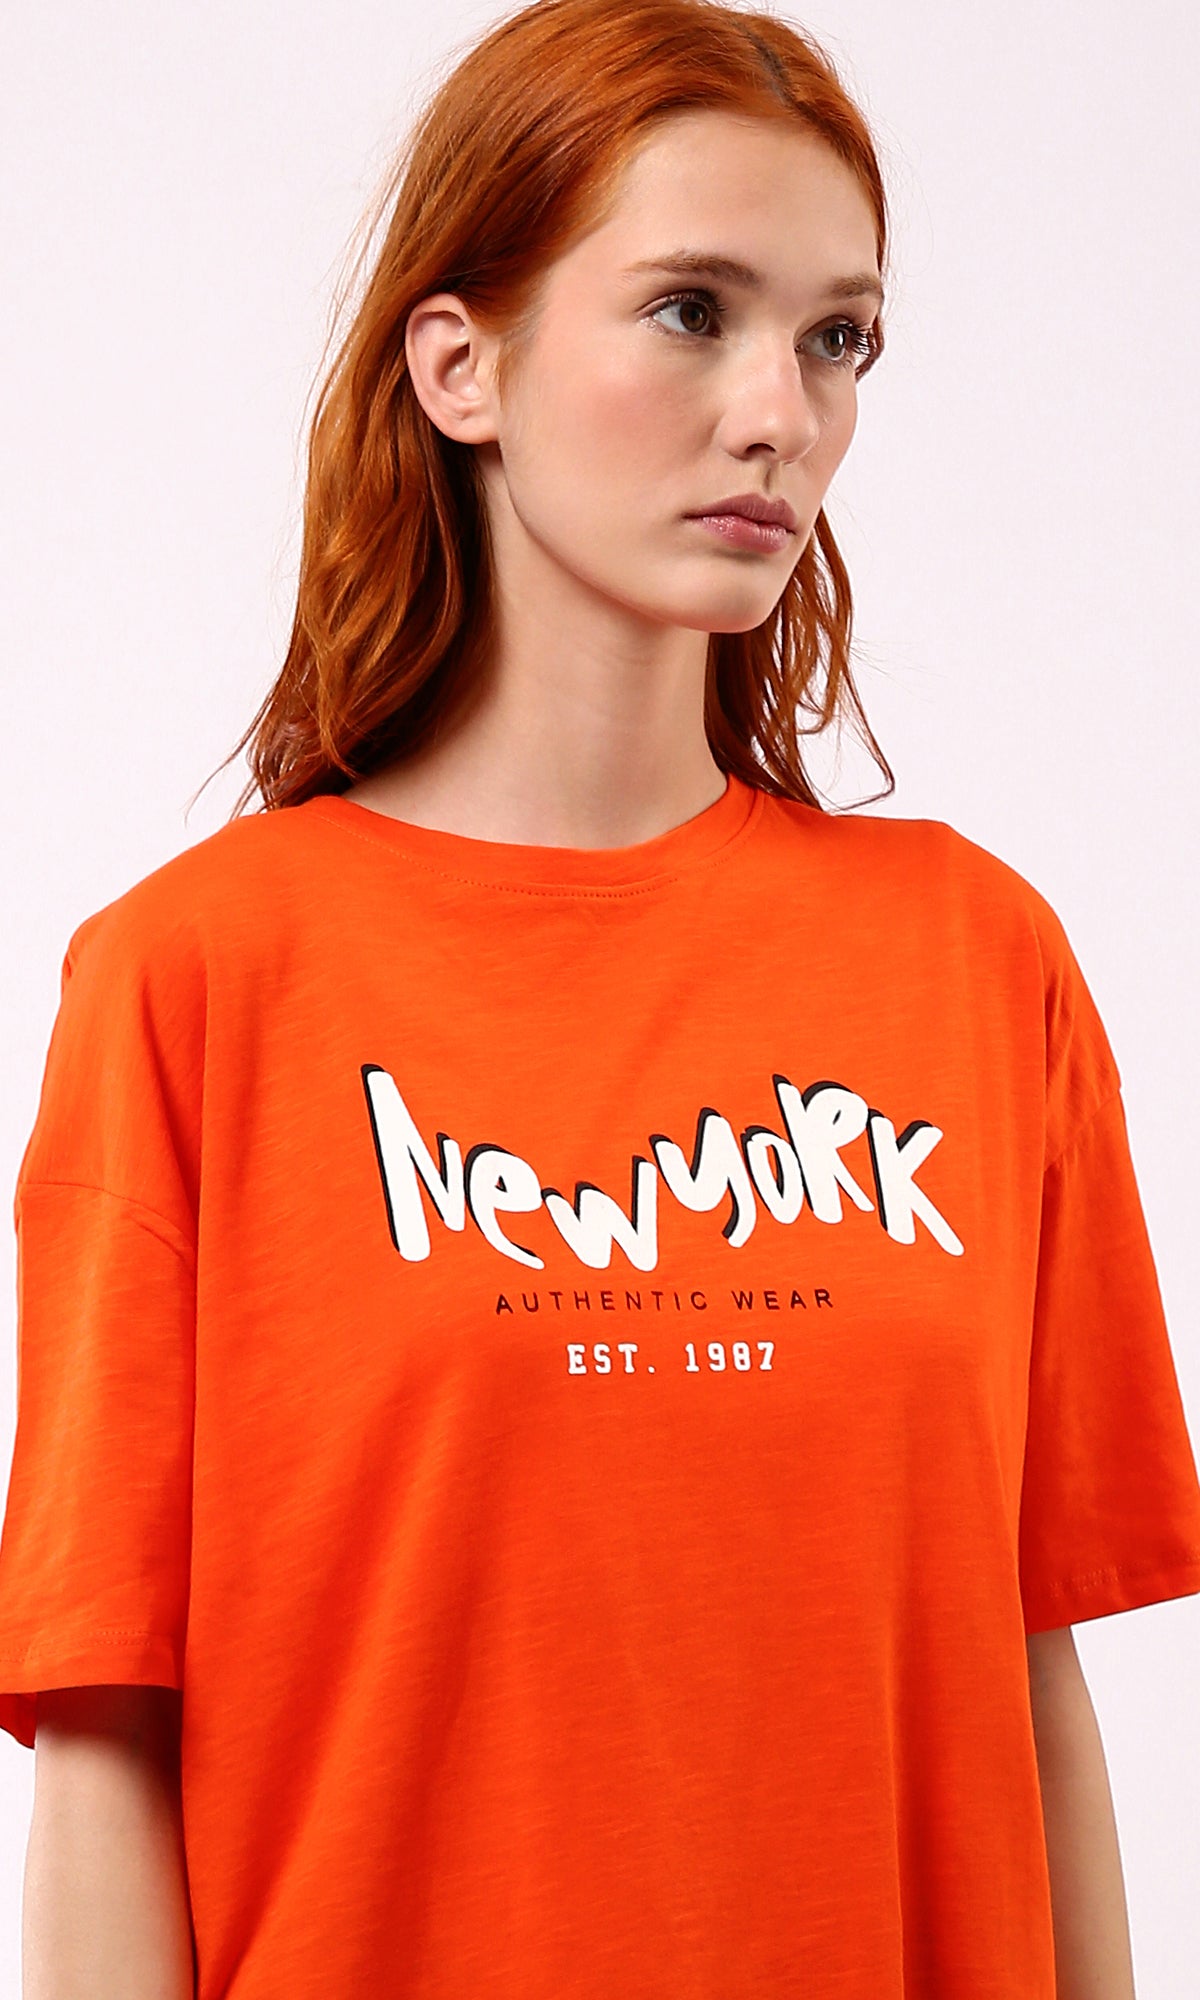 O180440 Hot Orange Printed "New York" Slip On Tee